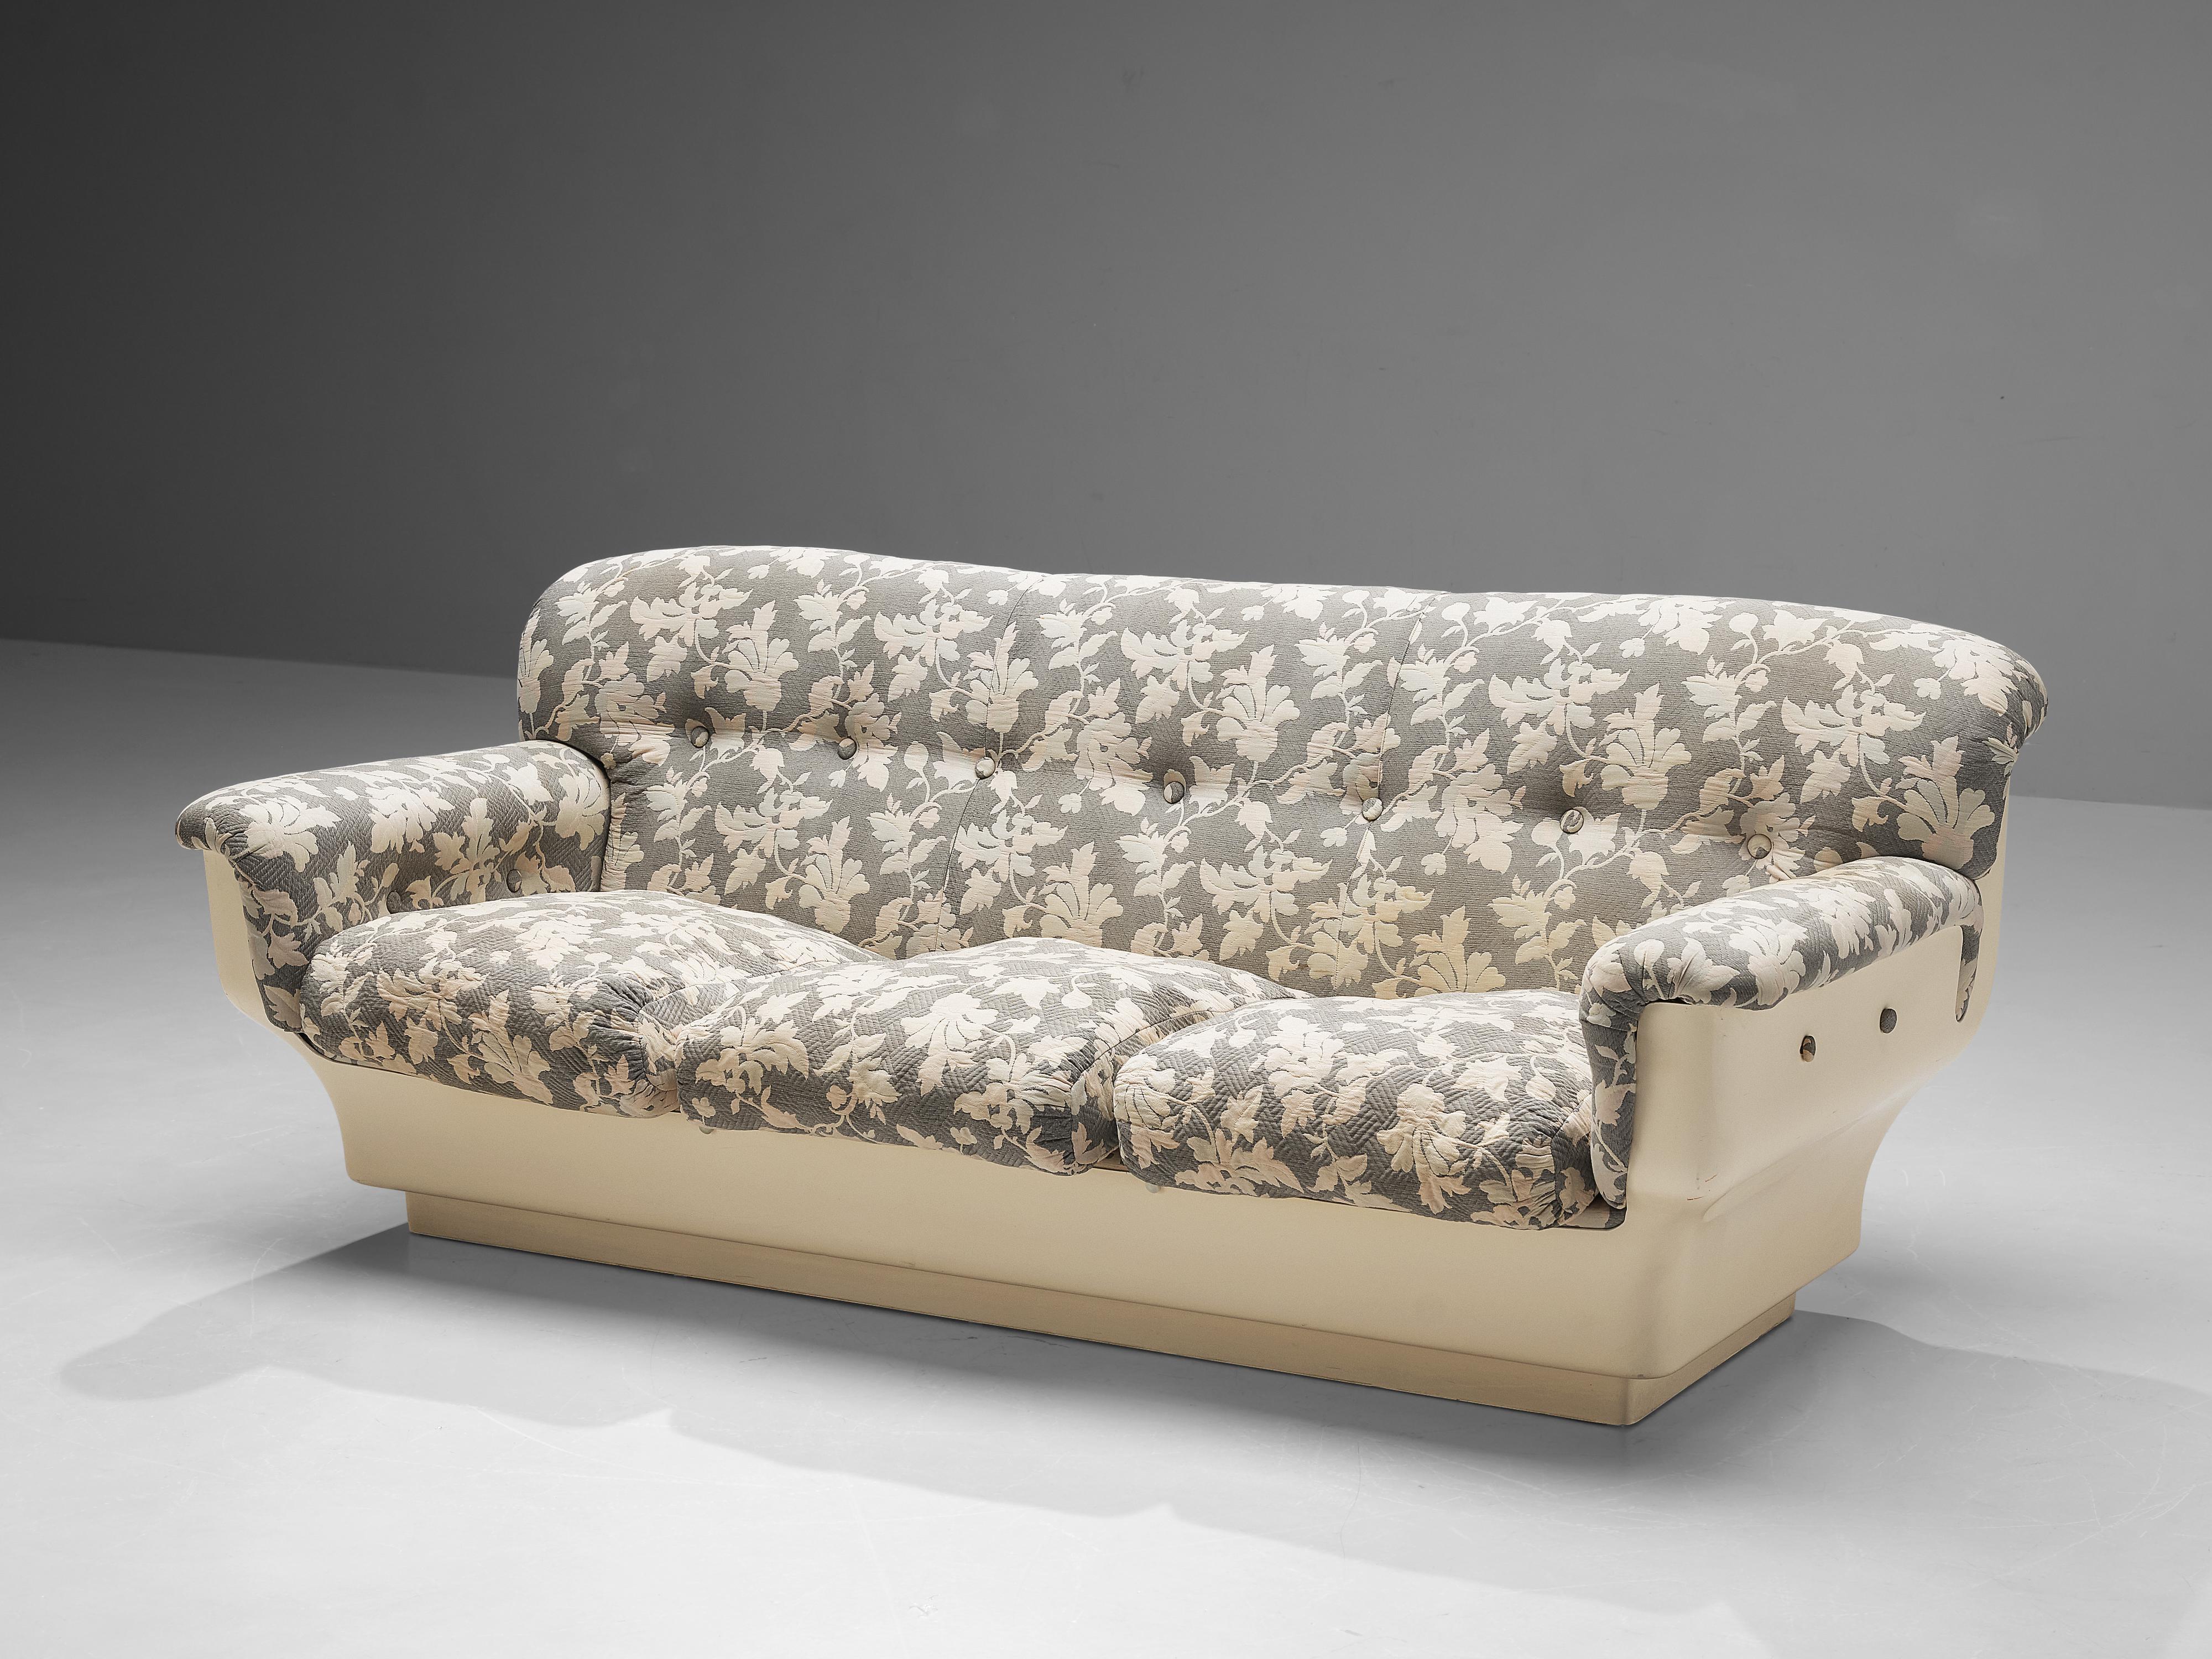 Post-Modern Studio Tecnico for Mobilquattro ‘Delta 699’ Sofa in Floral Upholstery For Sale